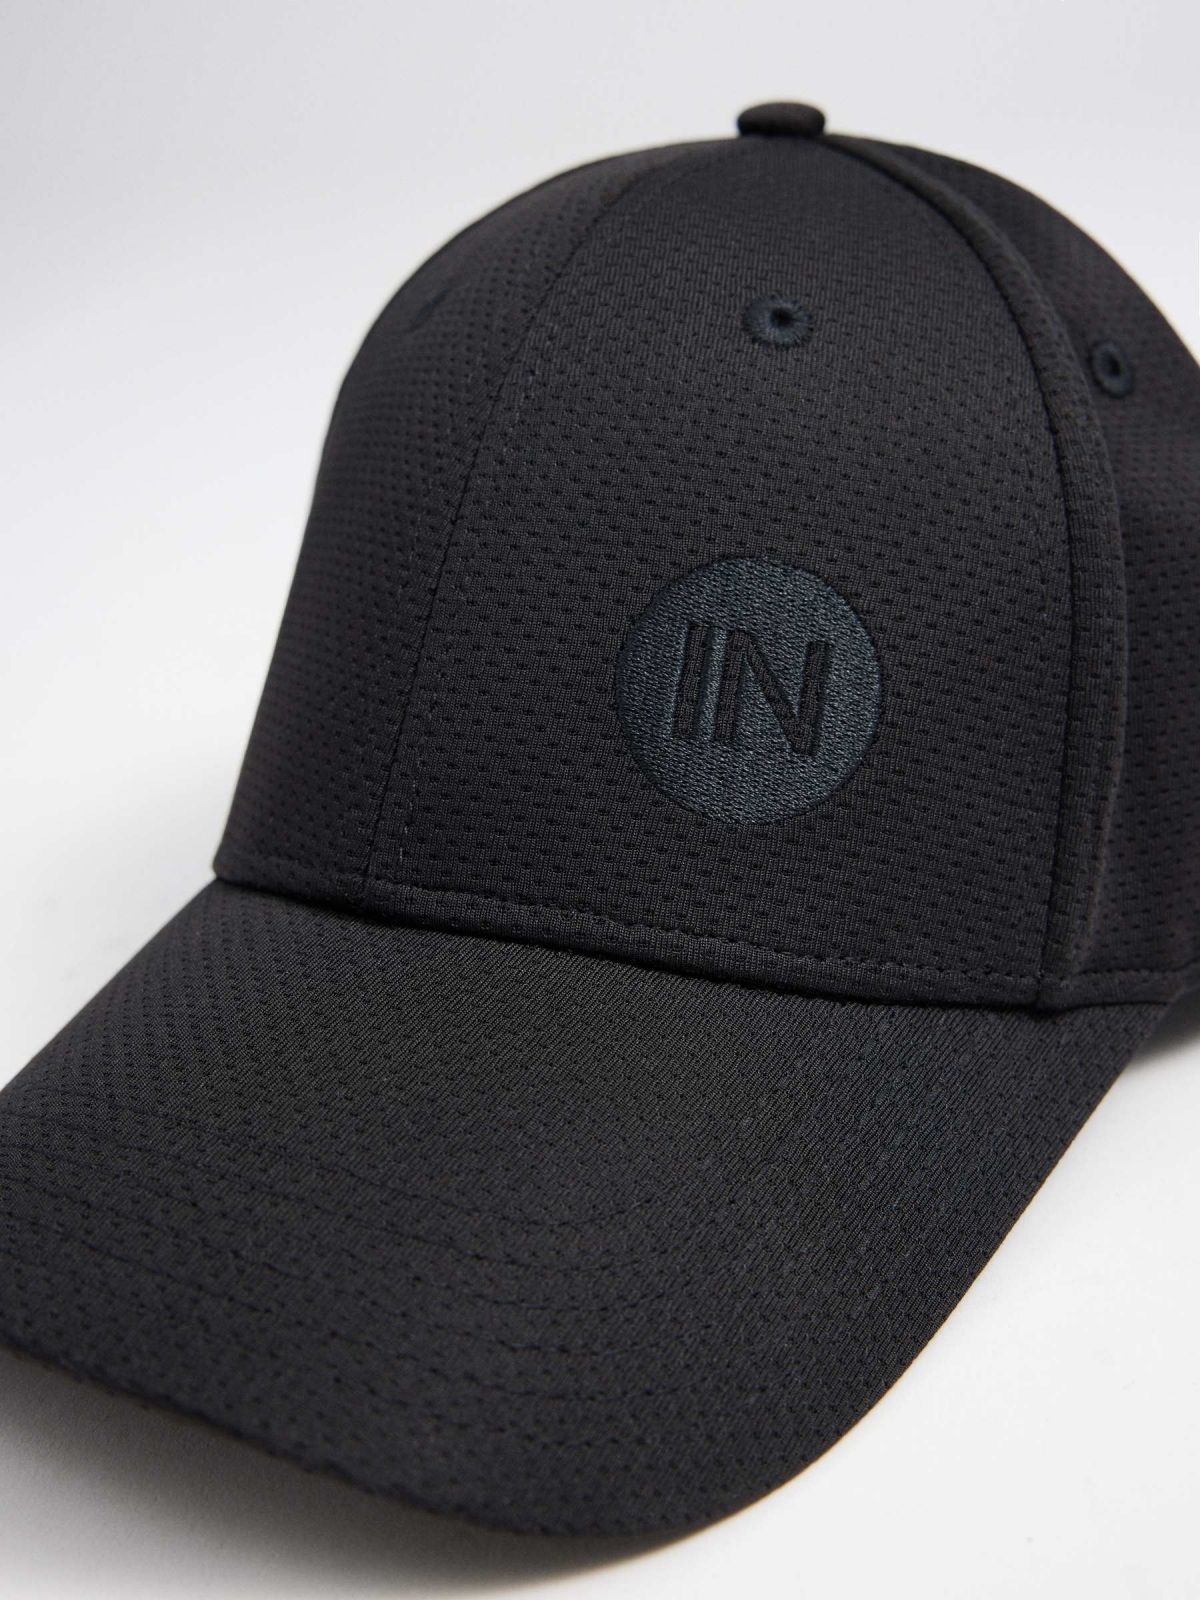 INSIDE baseball cap black detail view